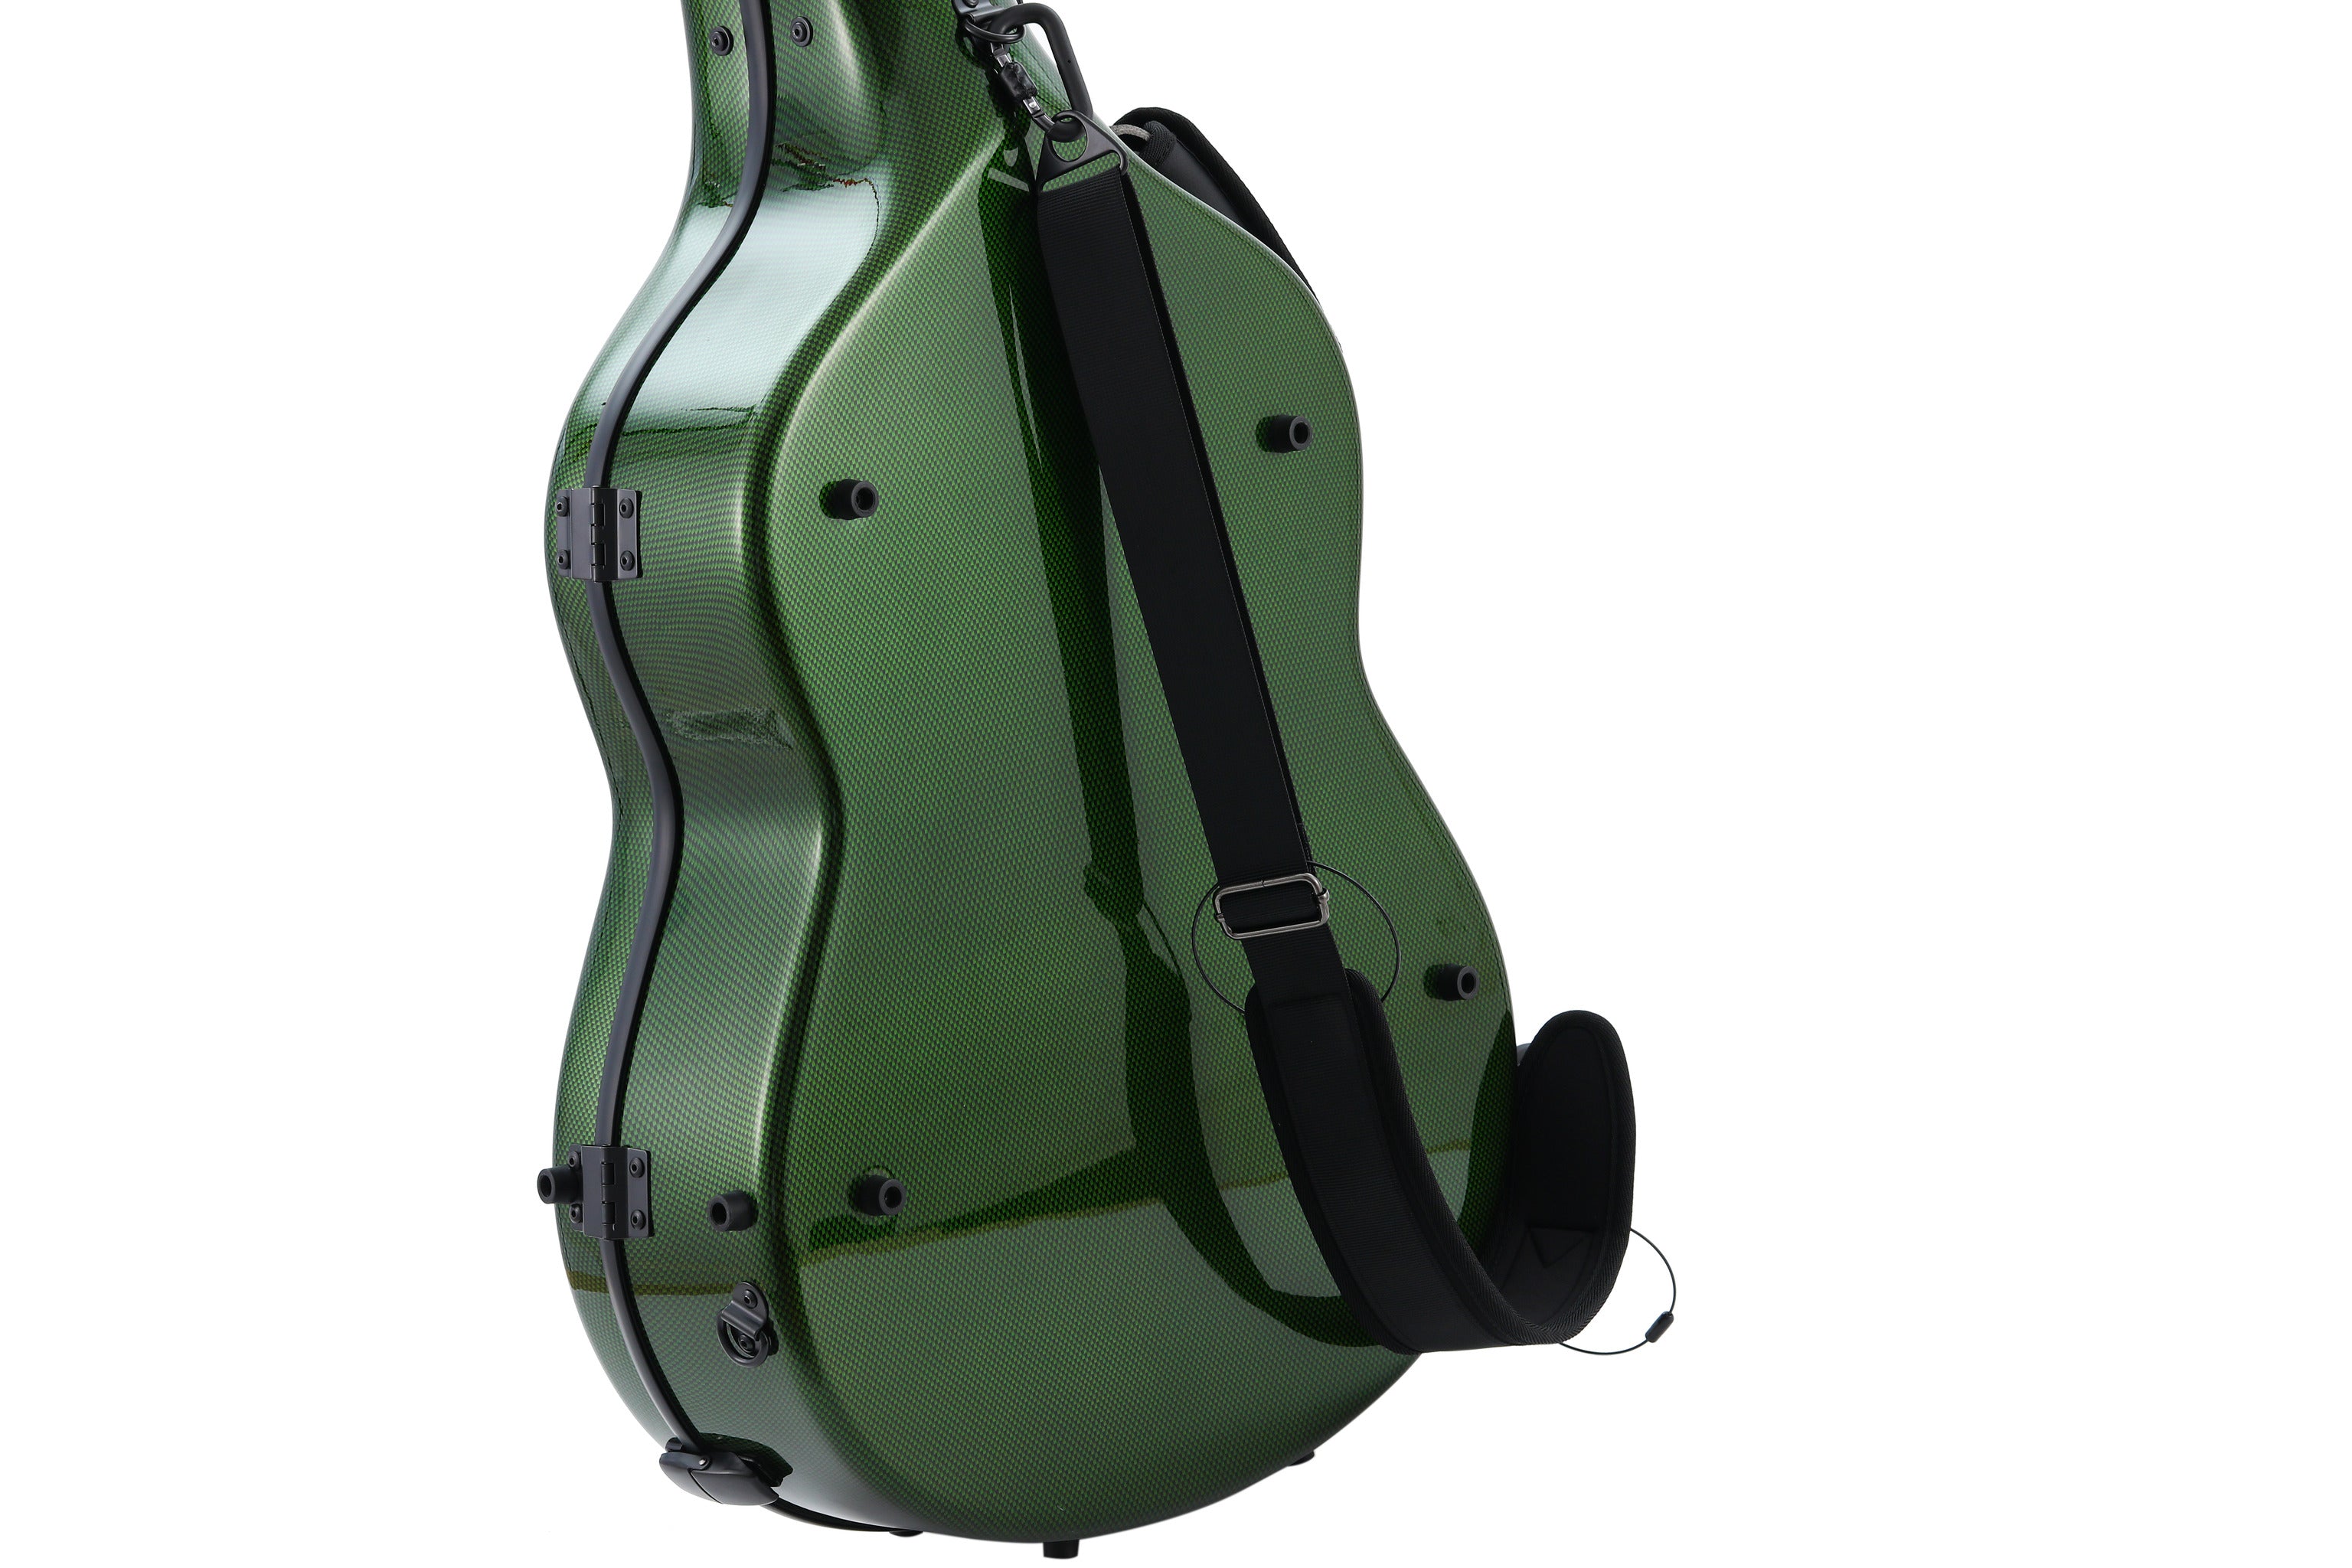 Alba Guitar Beads Case Green Carbon Pattern Gloss for Classical Guitar Acoustic, Flamenco guitar case